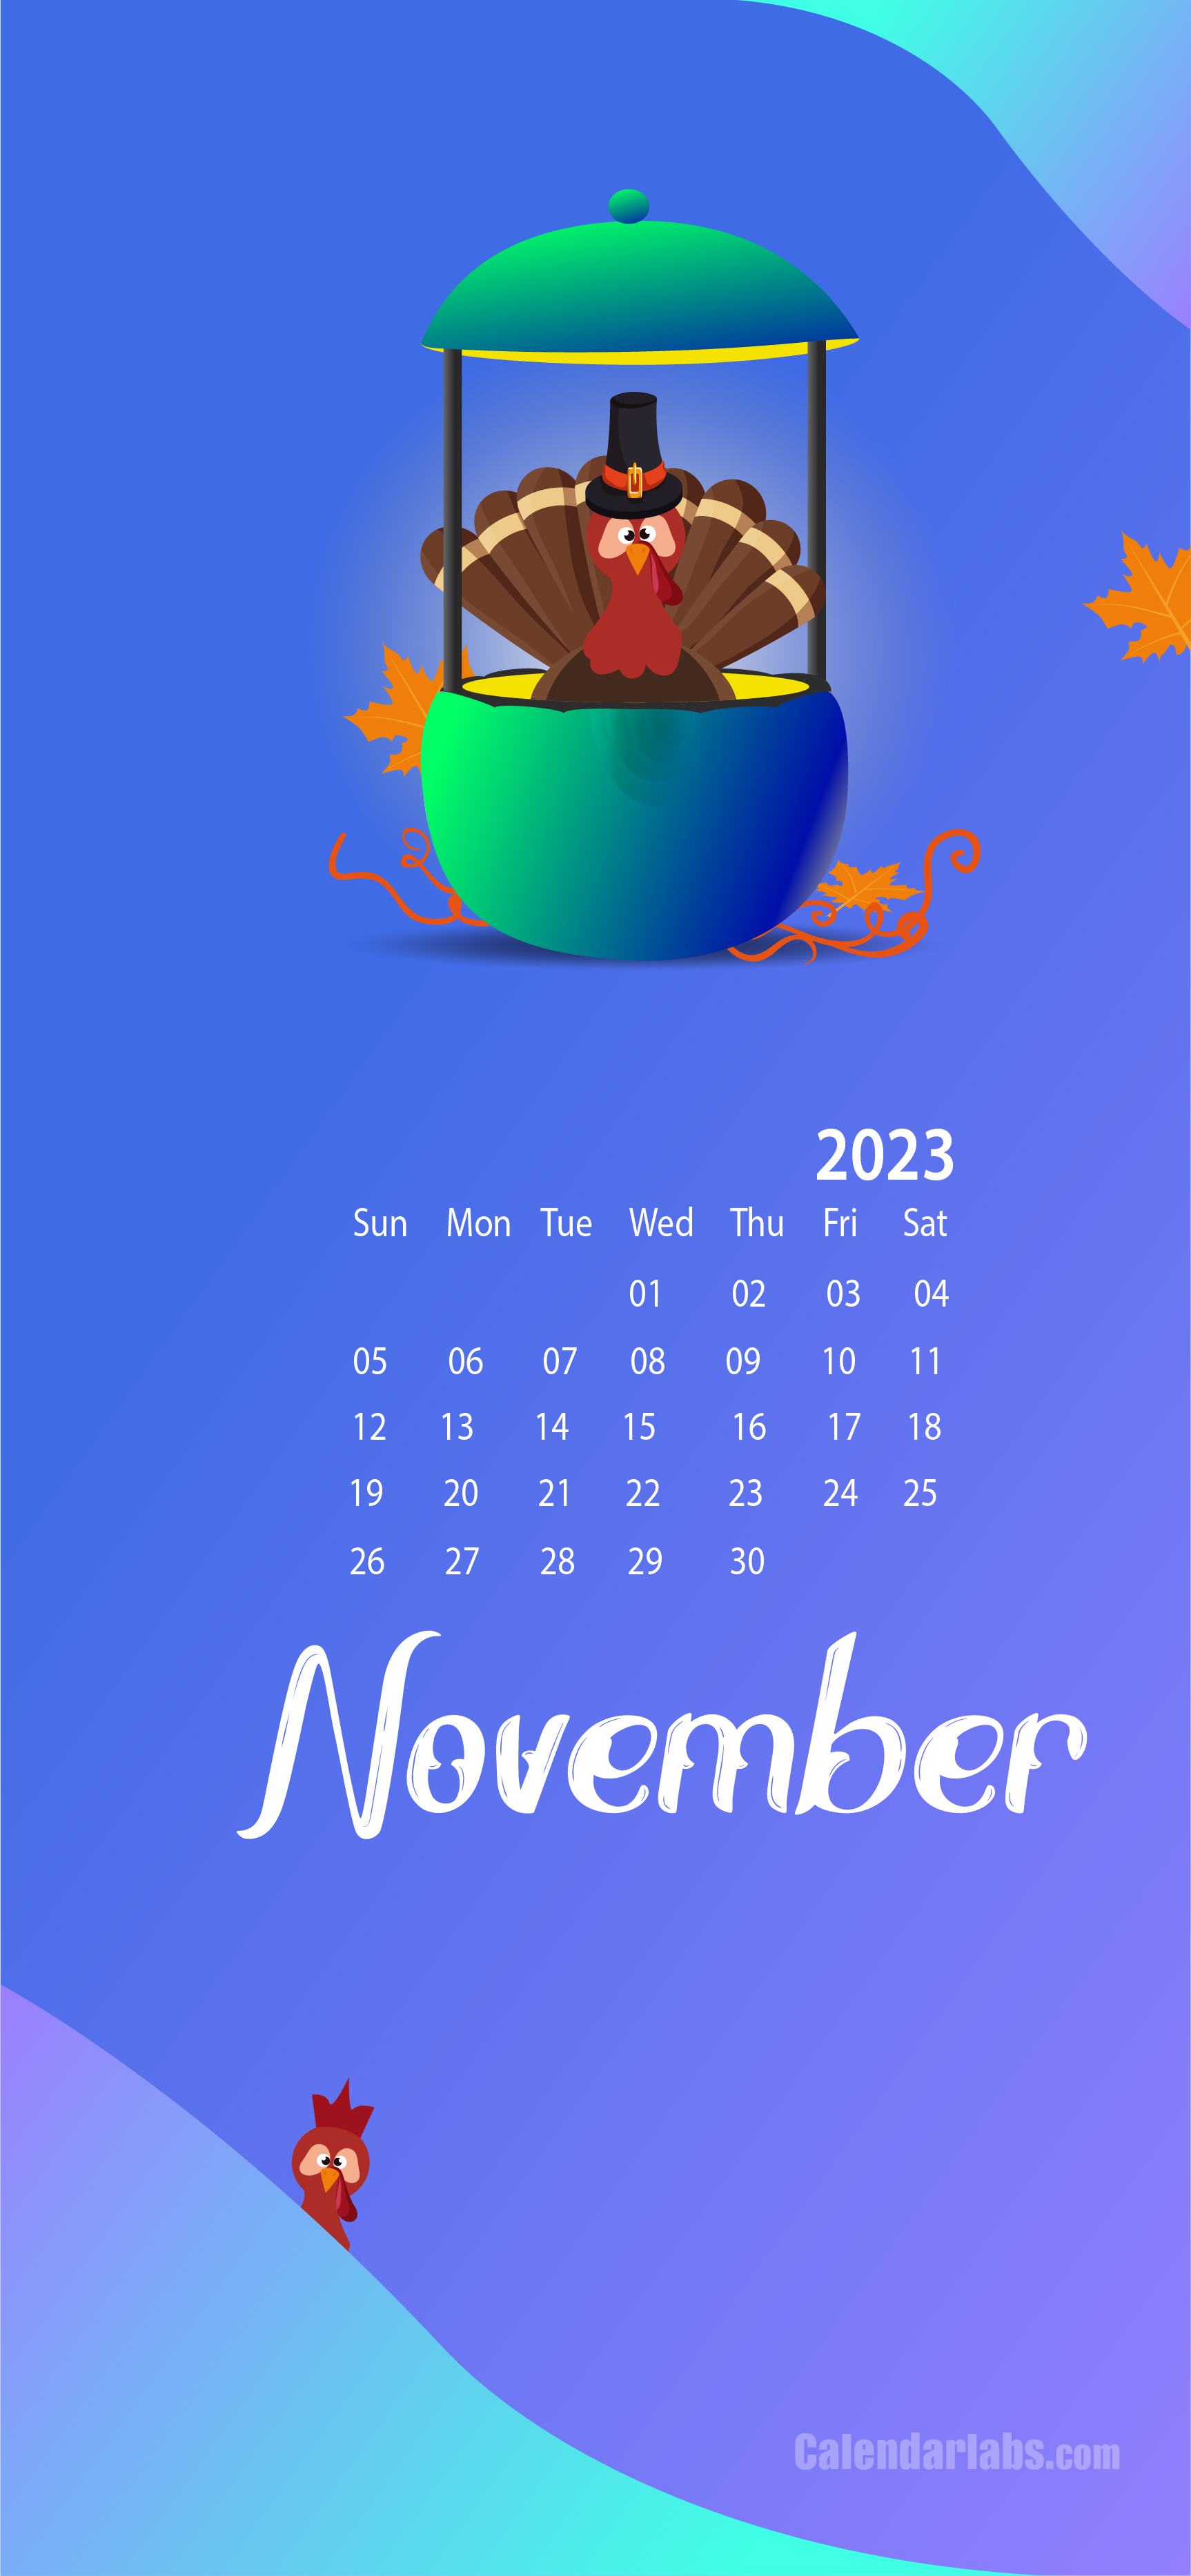 Thanksgiving  November 23, 2023 - Calendarr